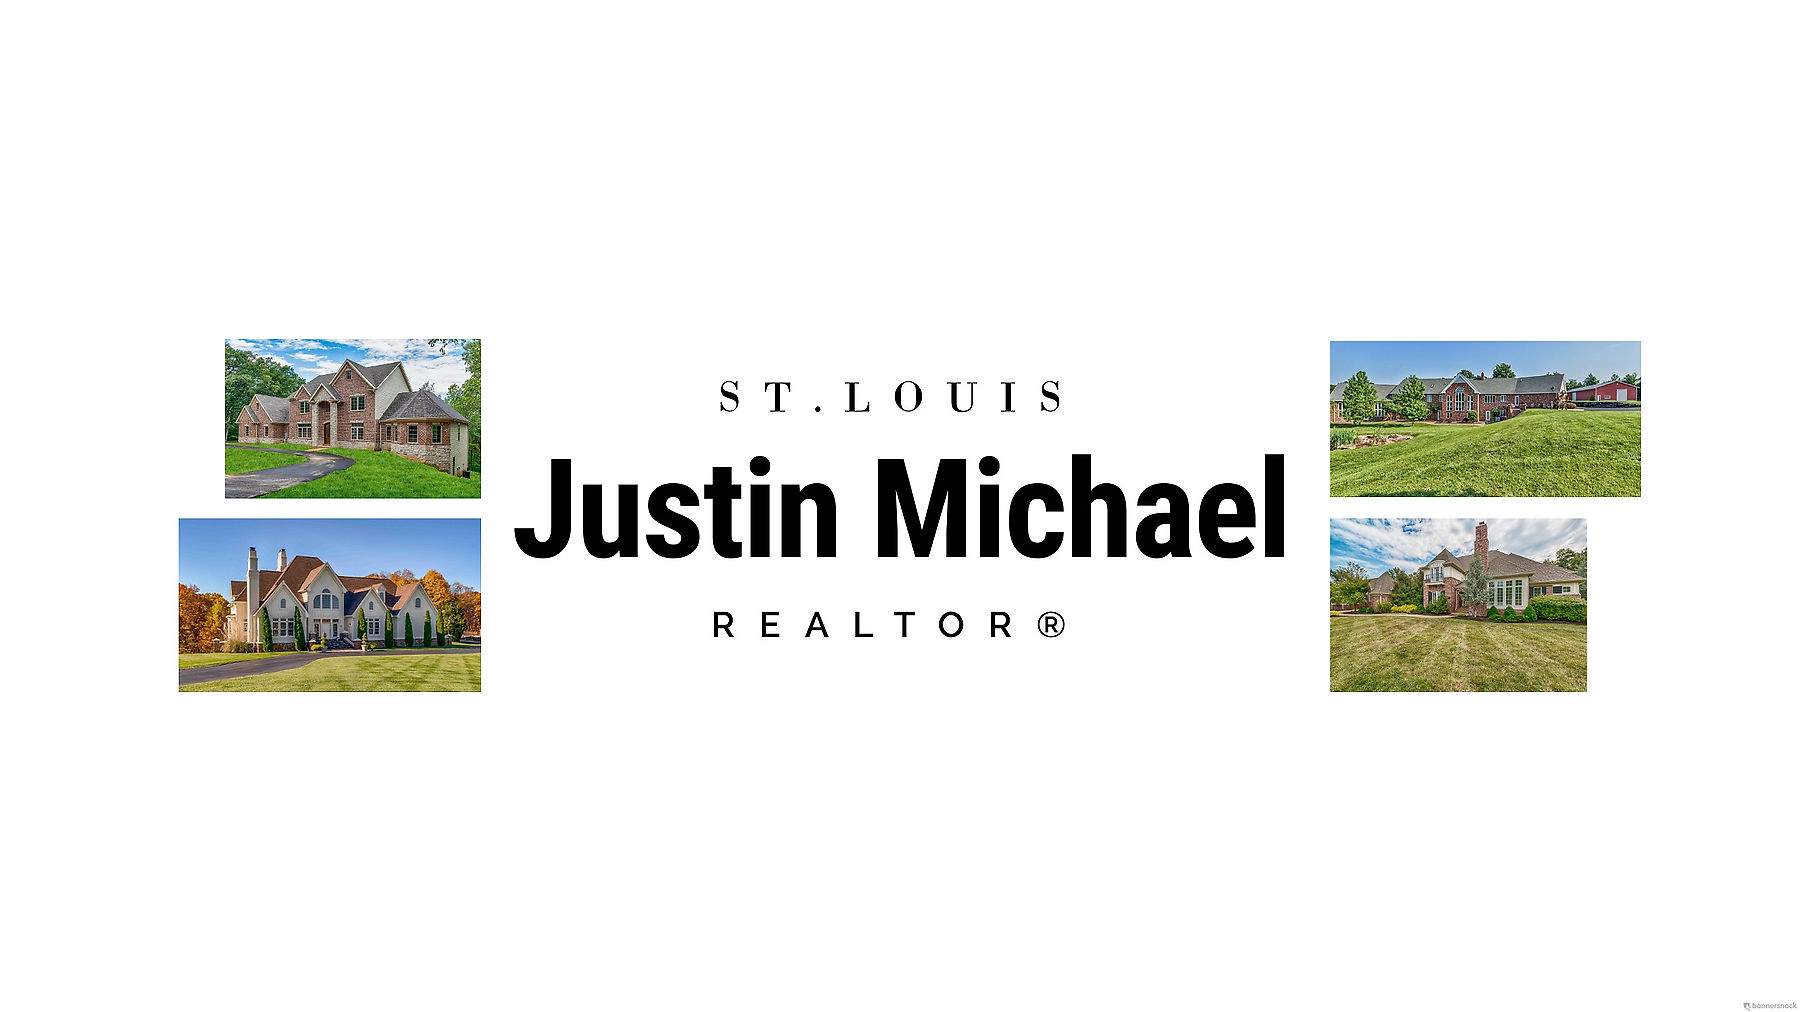 Justin Michael, St. Louis REALTOR®